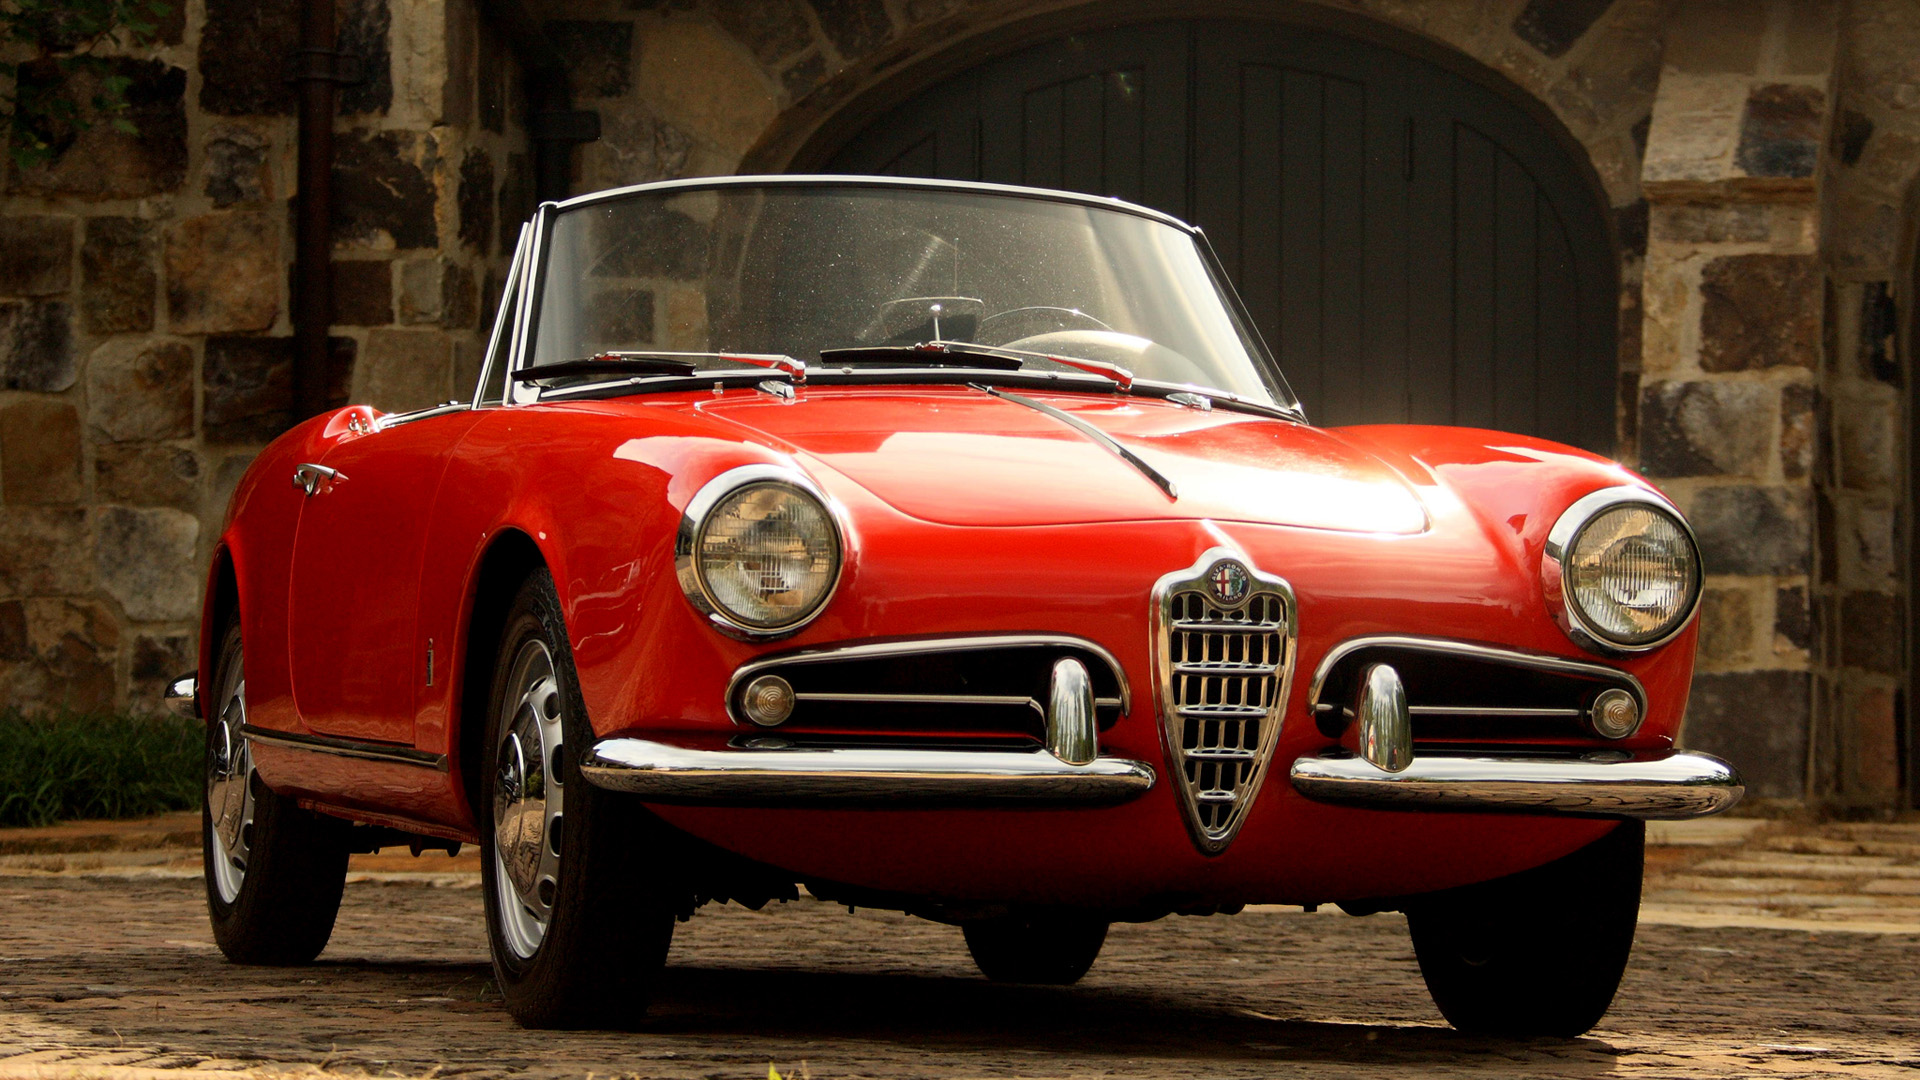  1956 Alfa Romeo Giulietta Spider Wallpaper.